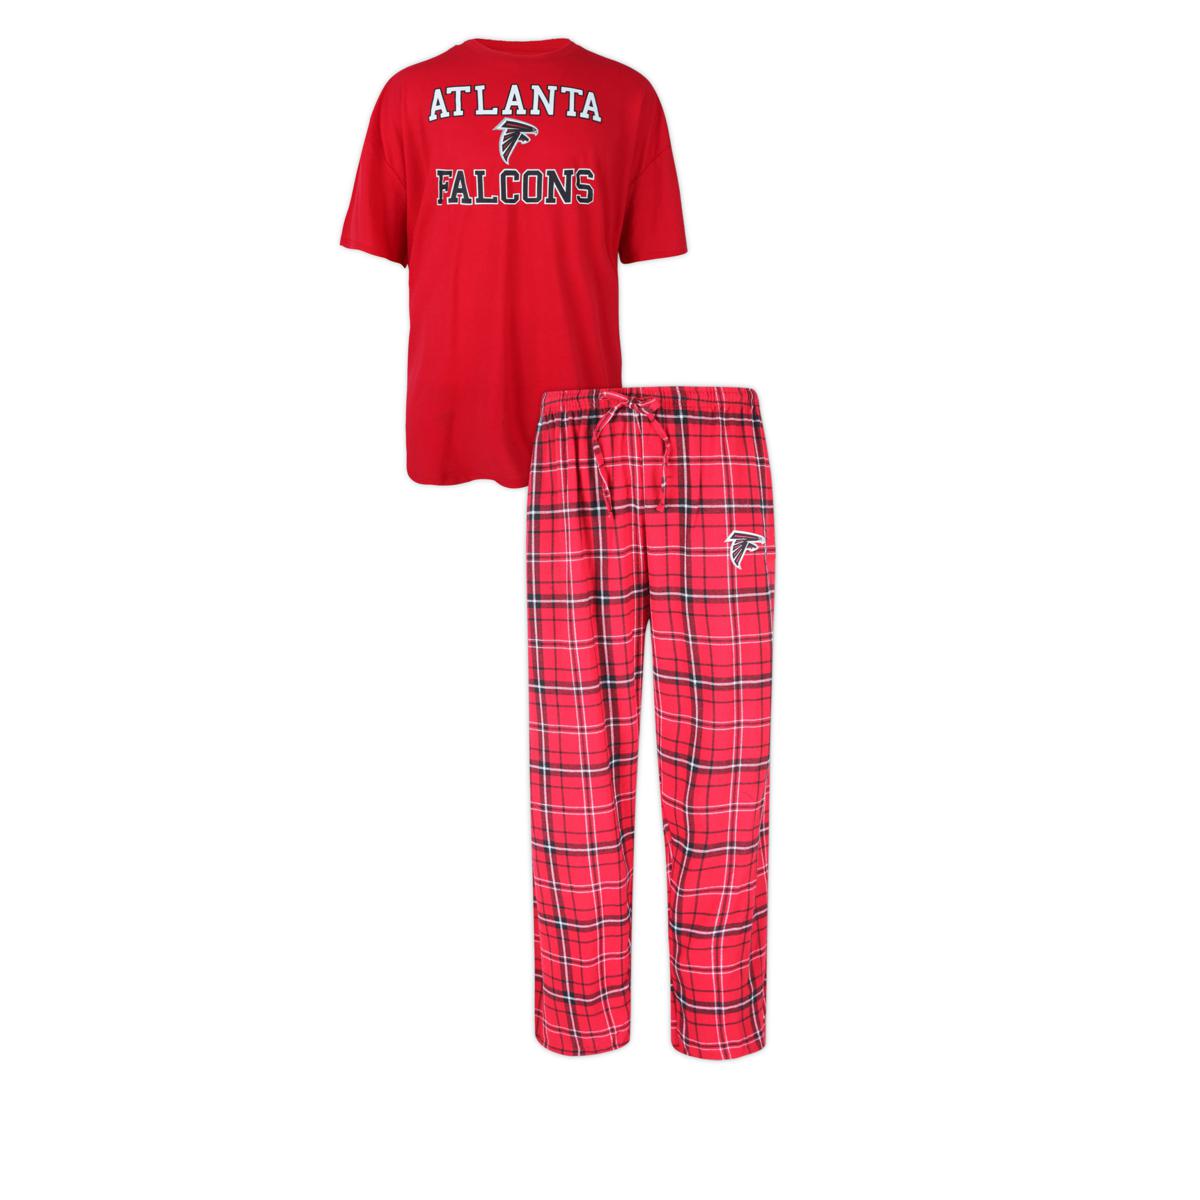 Officially Licensed NFL Men's Halftime Sleepwear Set by Concept Sports ...